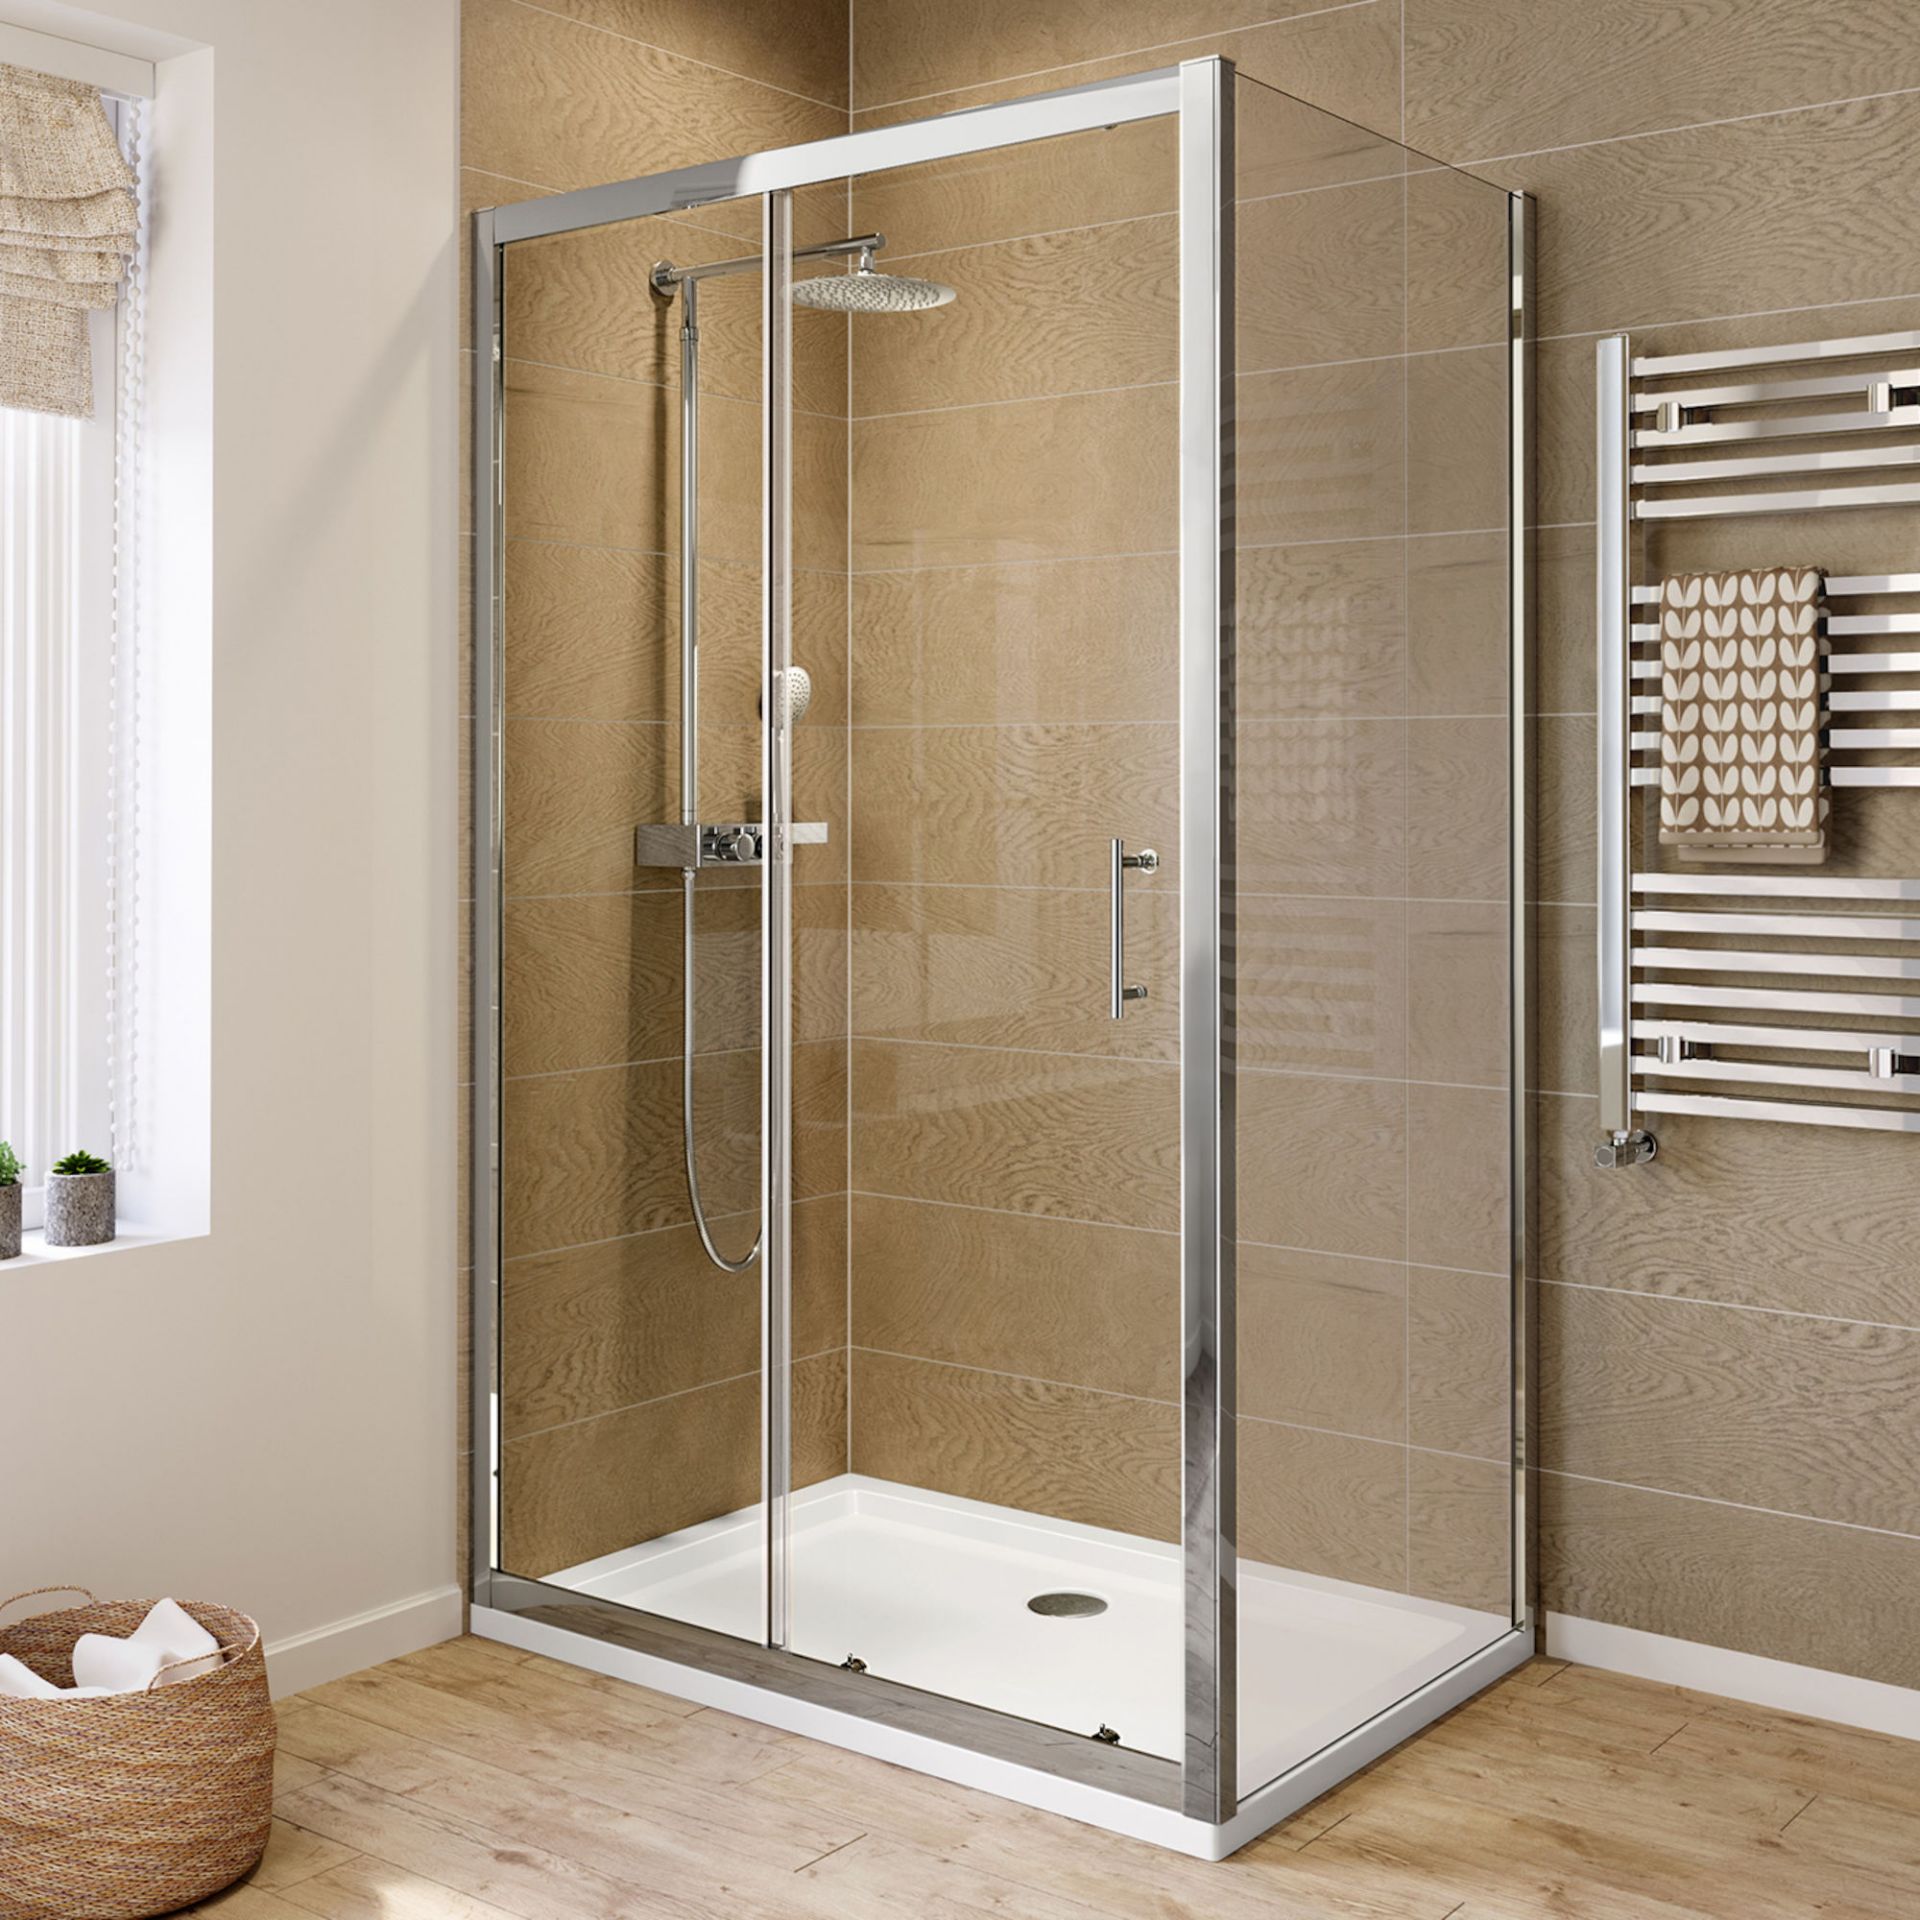 New Twyfords 1200x900mm - 6mm - Elements Sliding Door Shower Enclosure. RRP £363.99. G68503C1+...